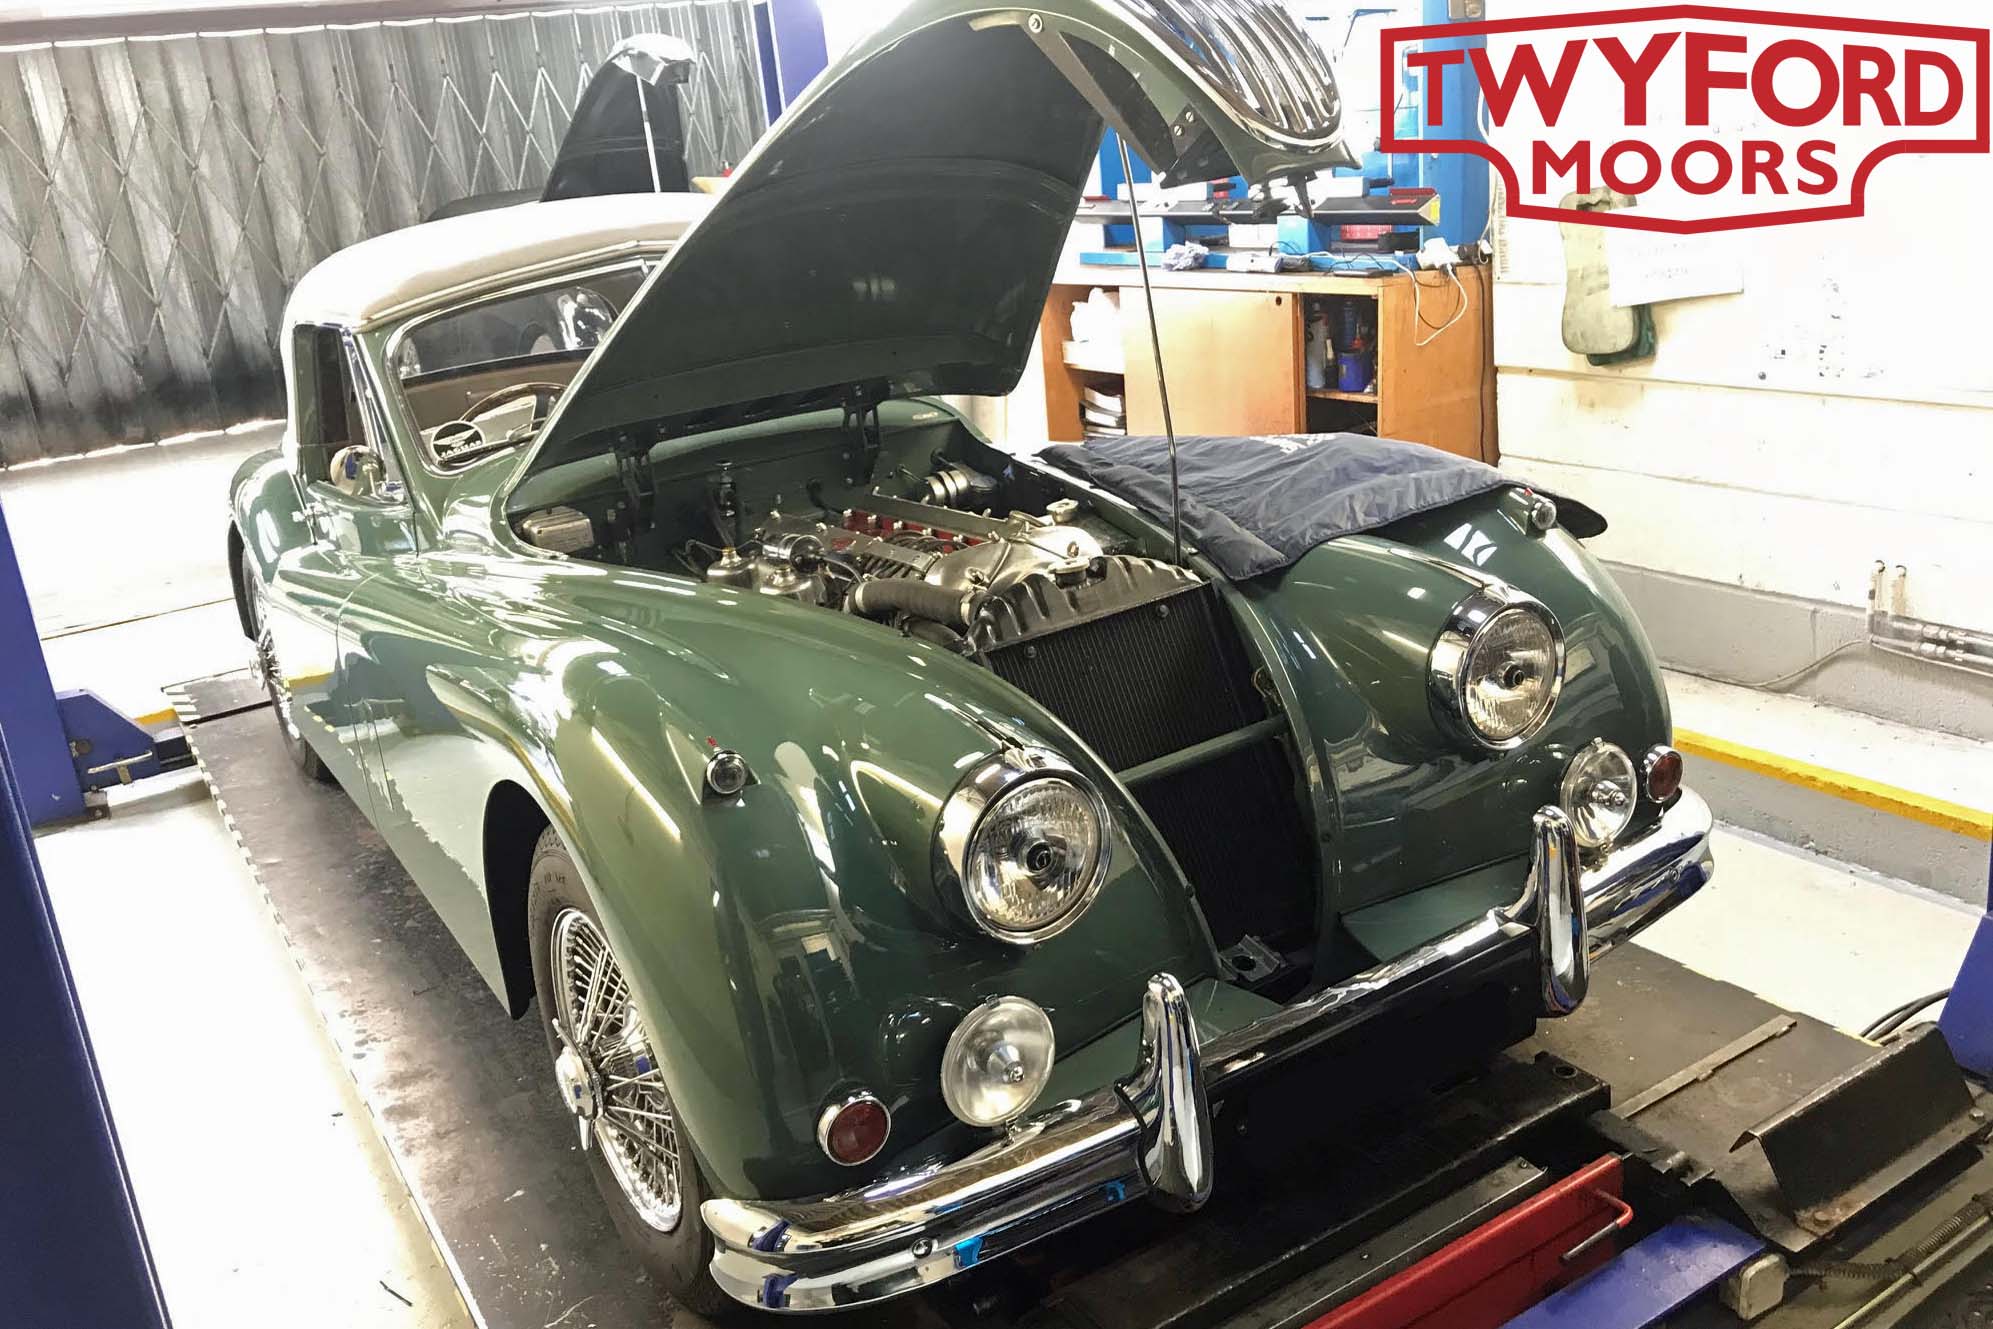 Twyford Moors fully restored Jaguar XK140